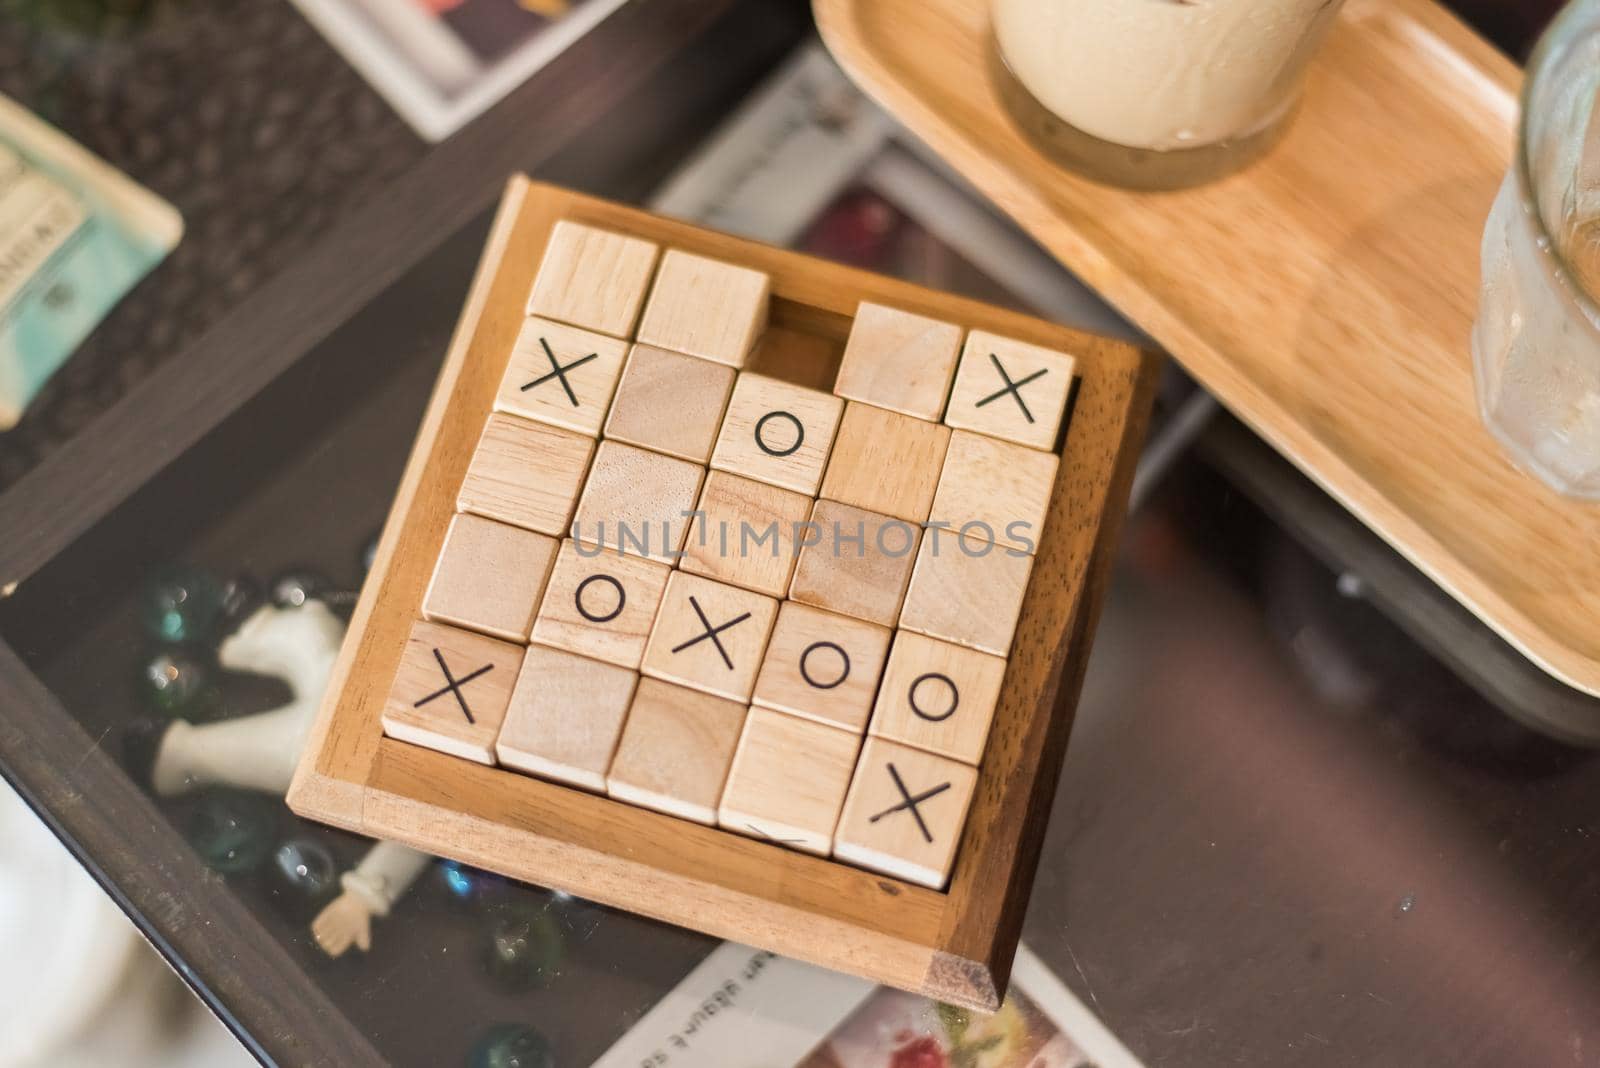 Wood sudoku board and tiles by Wmpix